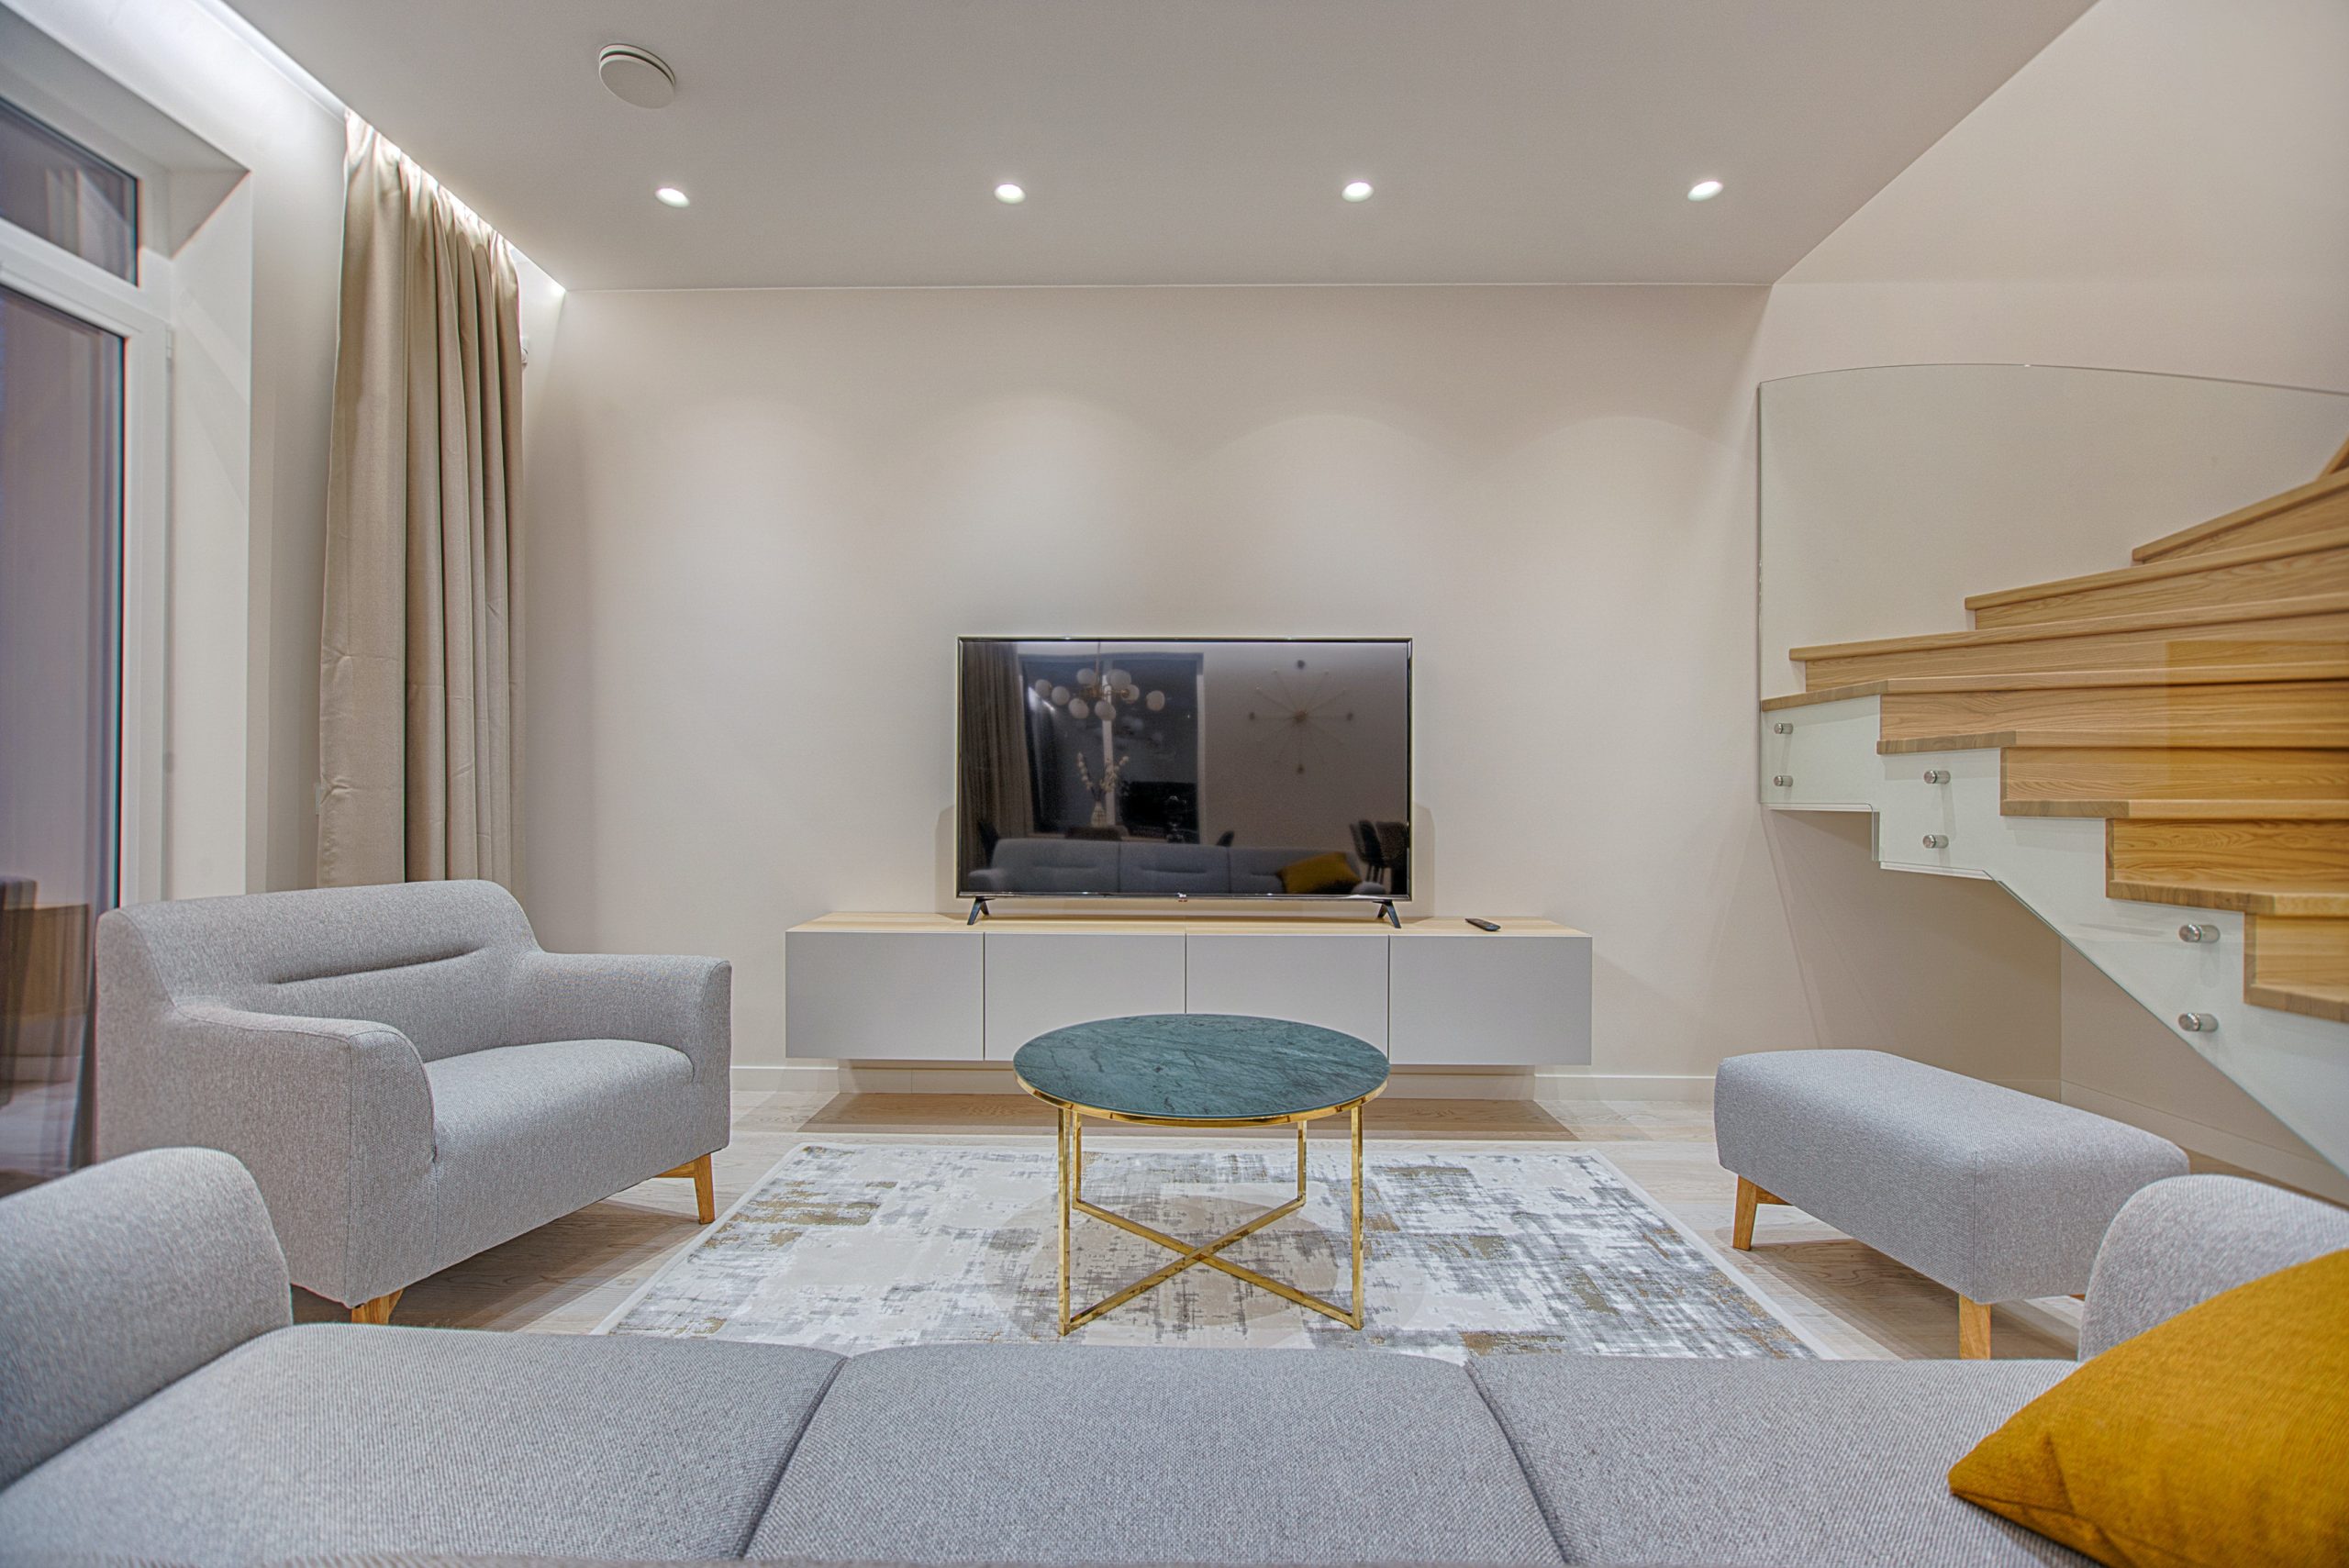 beautiful Indian Living Room Designs Ideas